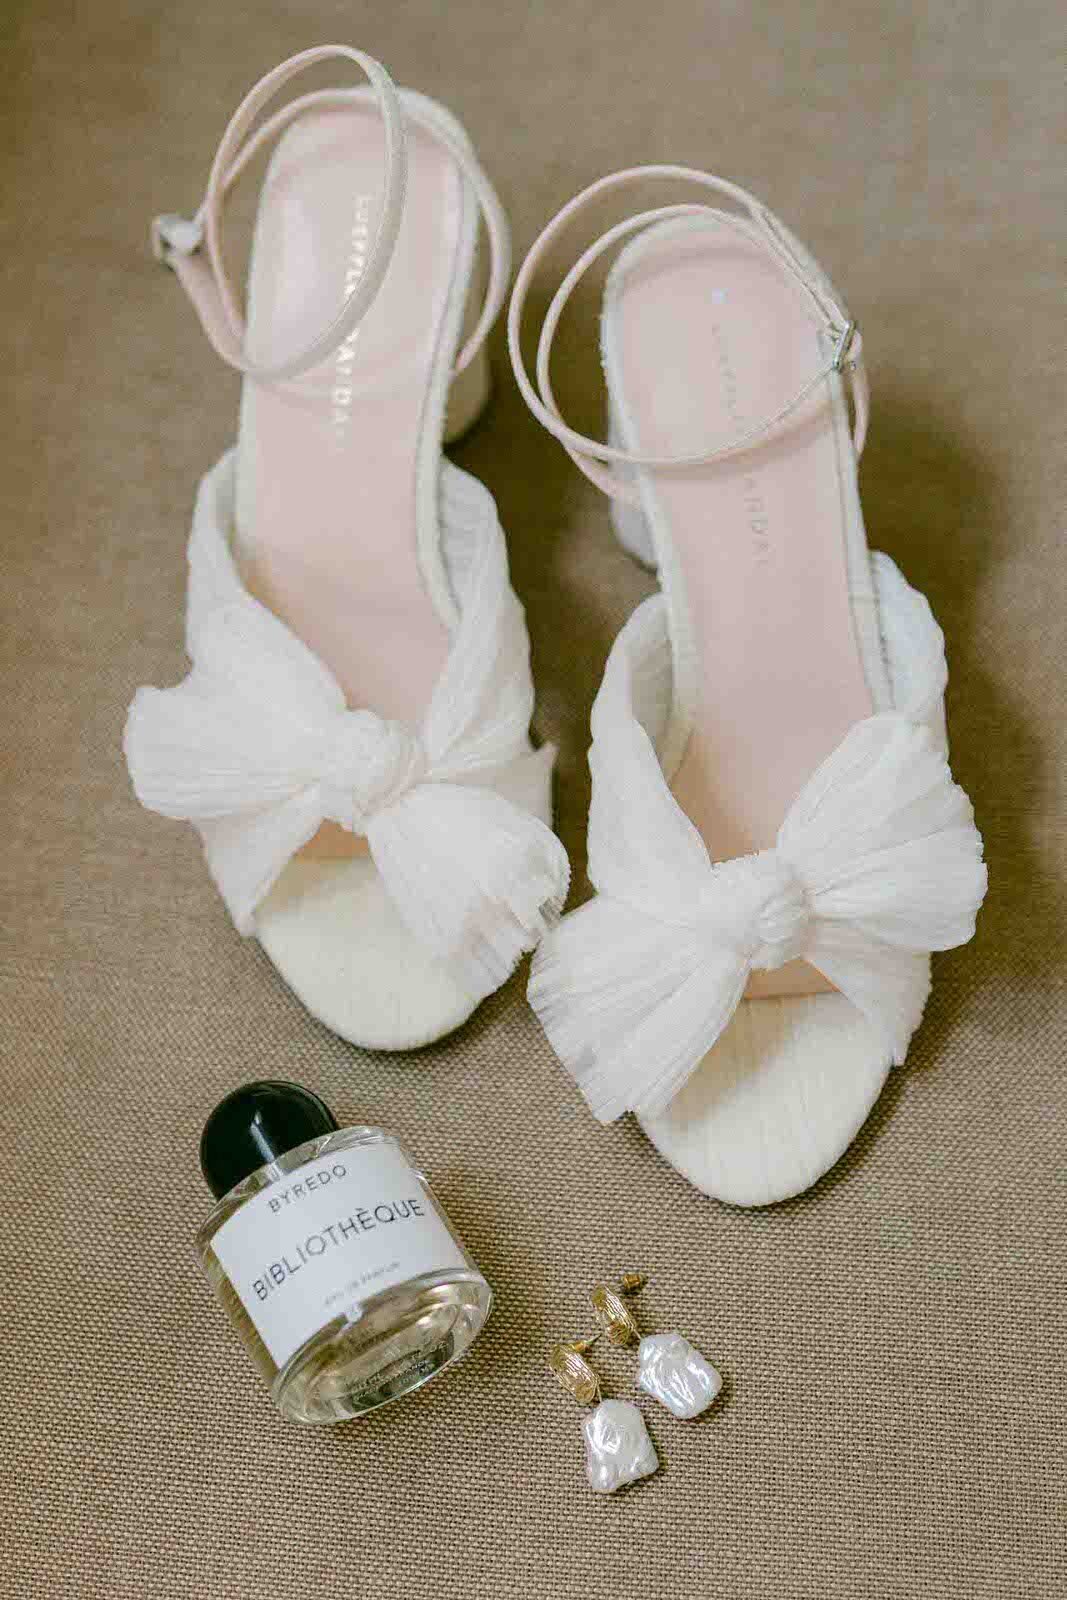 Loeffler Randall wedding shoes, Byredo perfume and pearl earrings